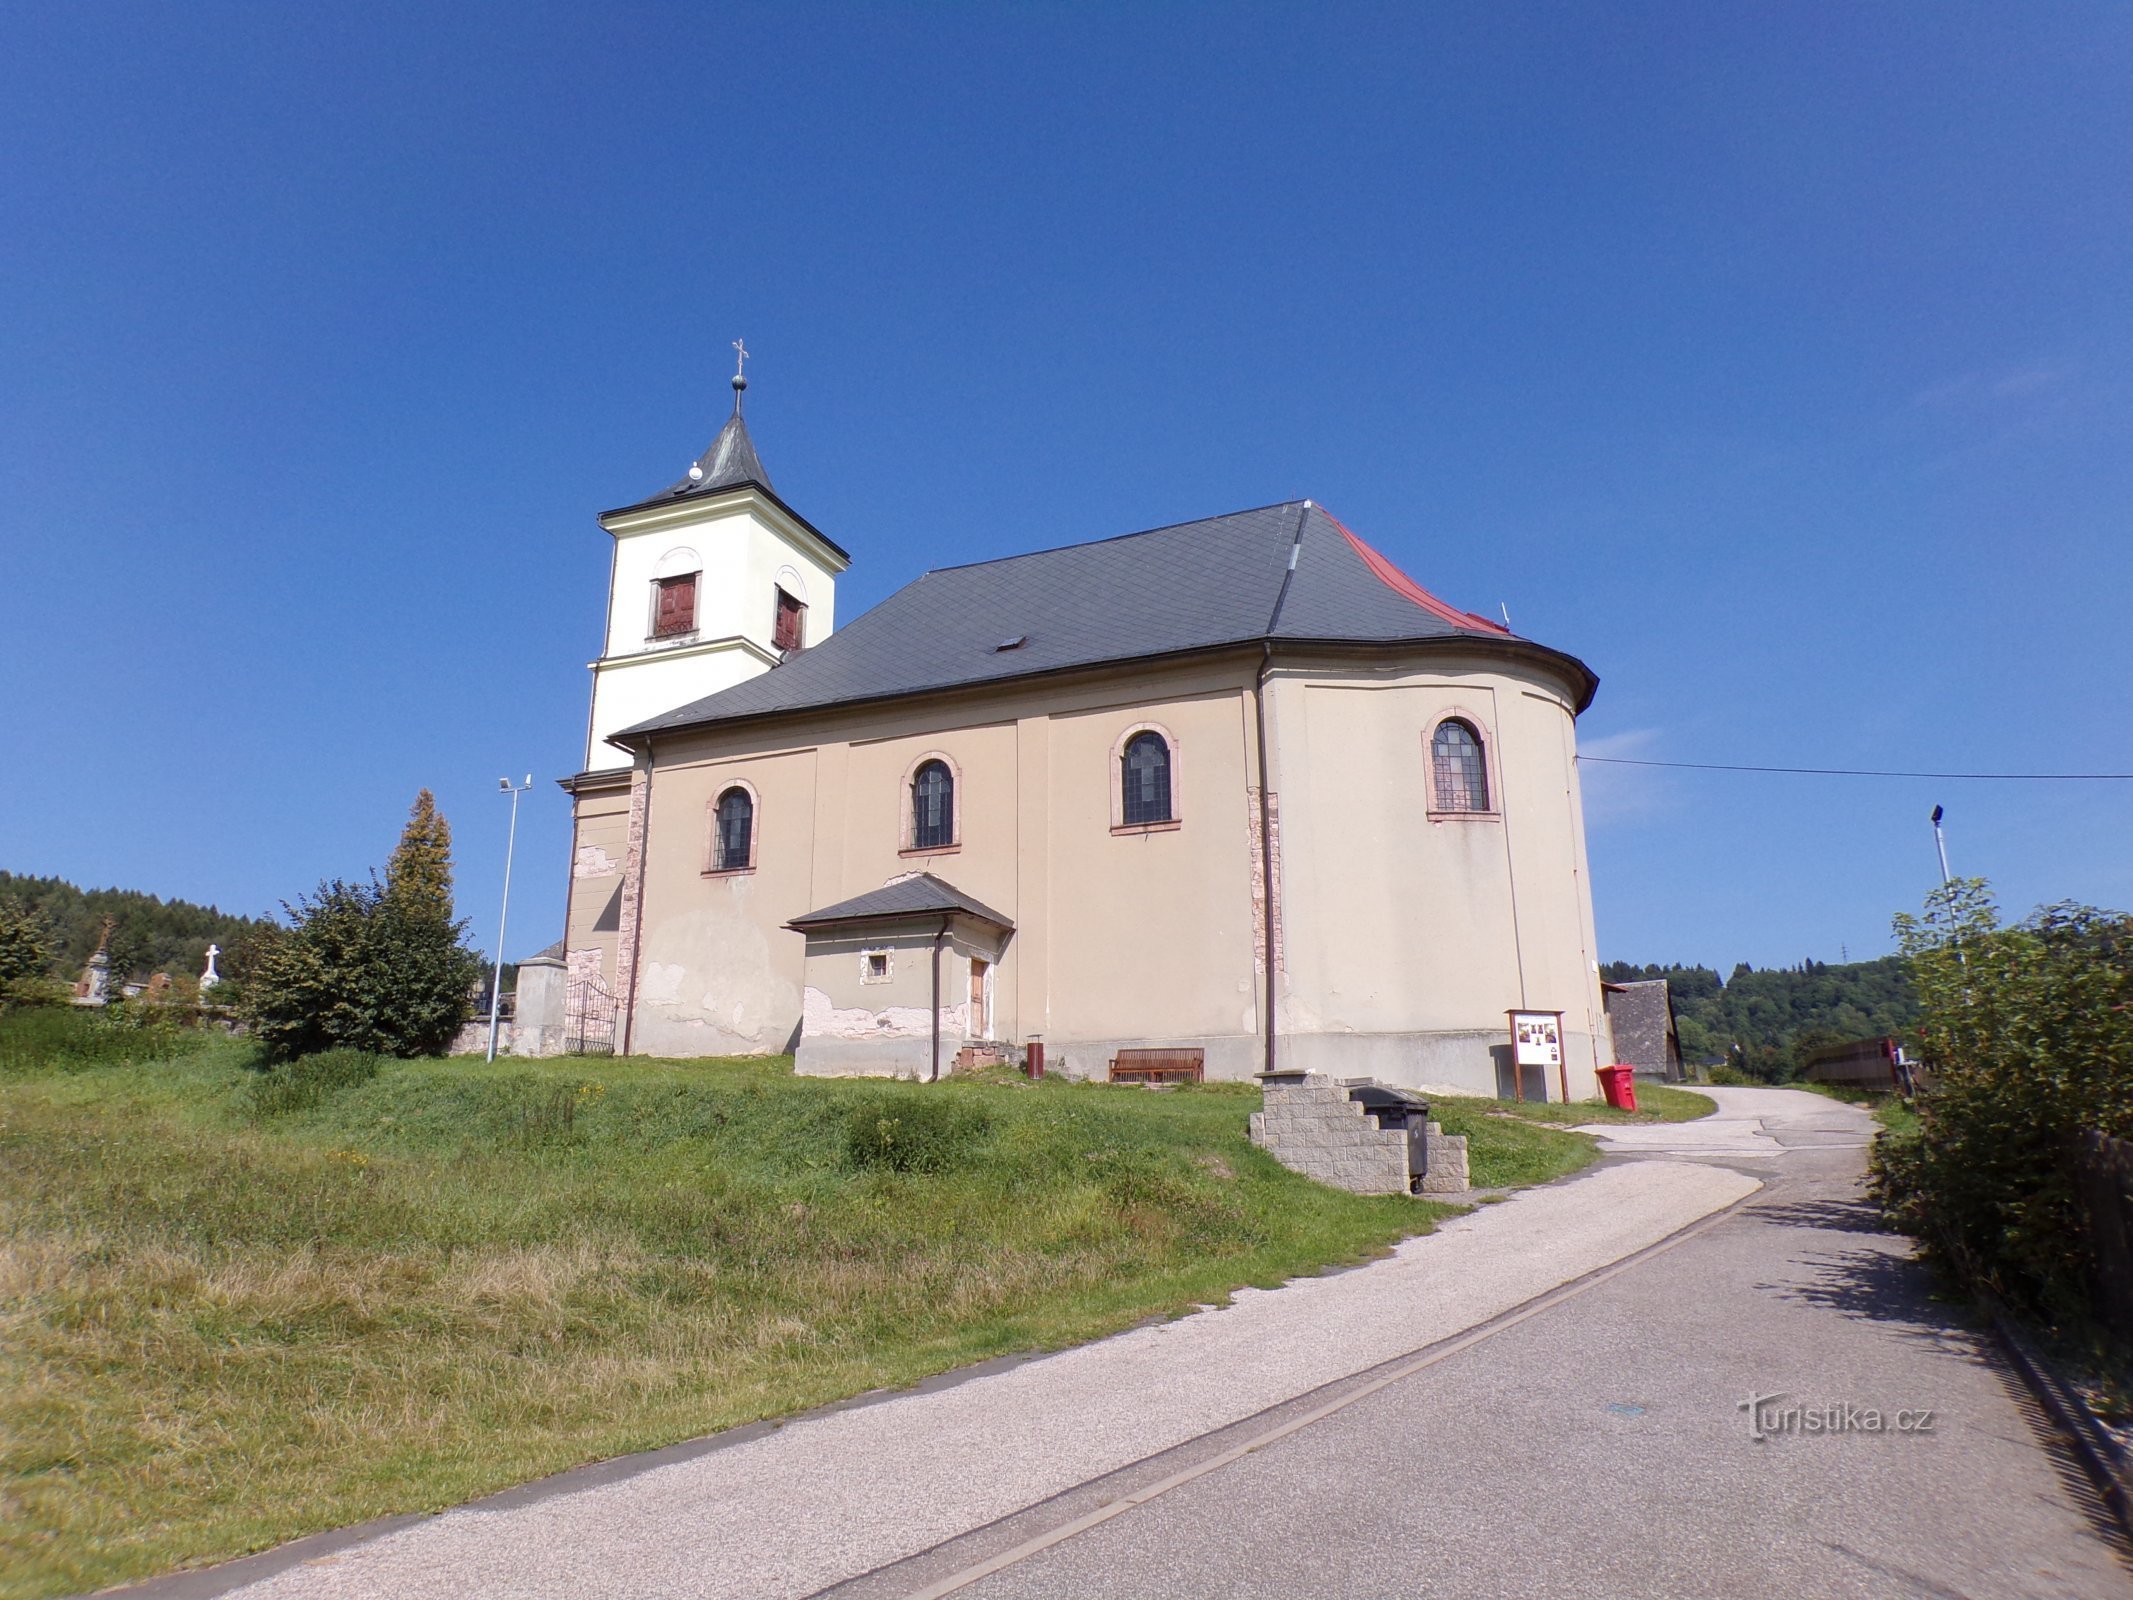 kirken St. Johannes Døberen (Markoušovice, 6.9.2021/XNUMX/XNUMX)